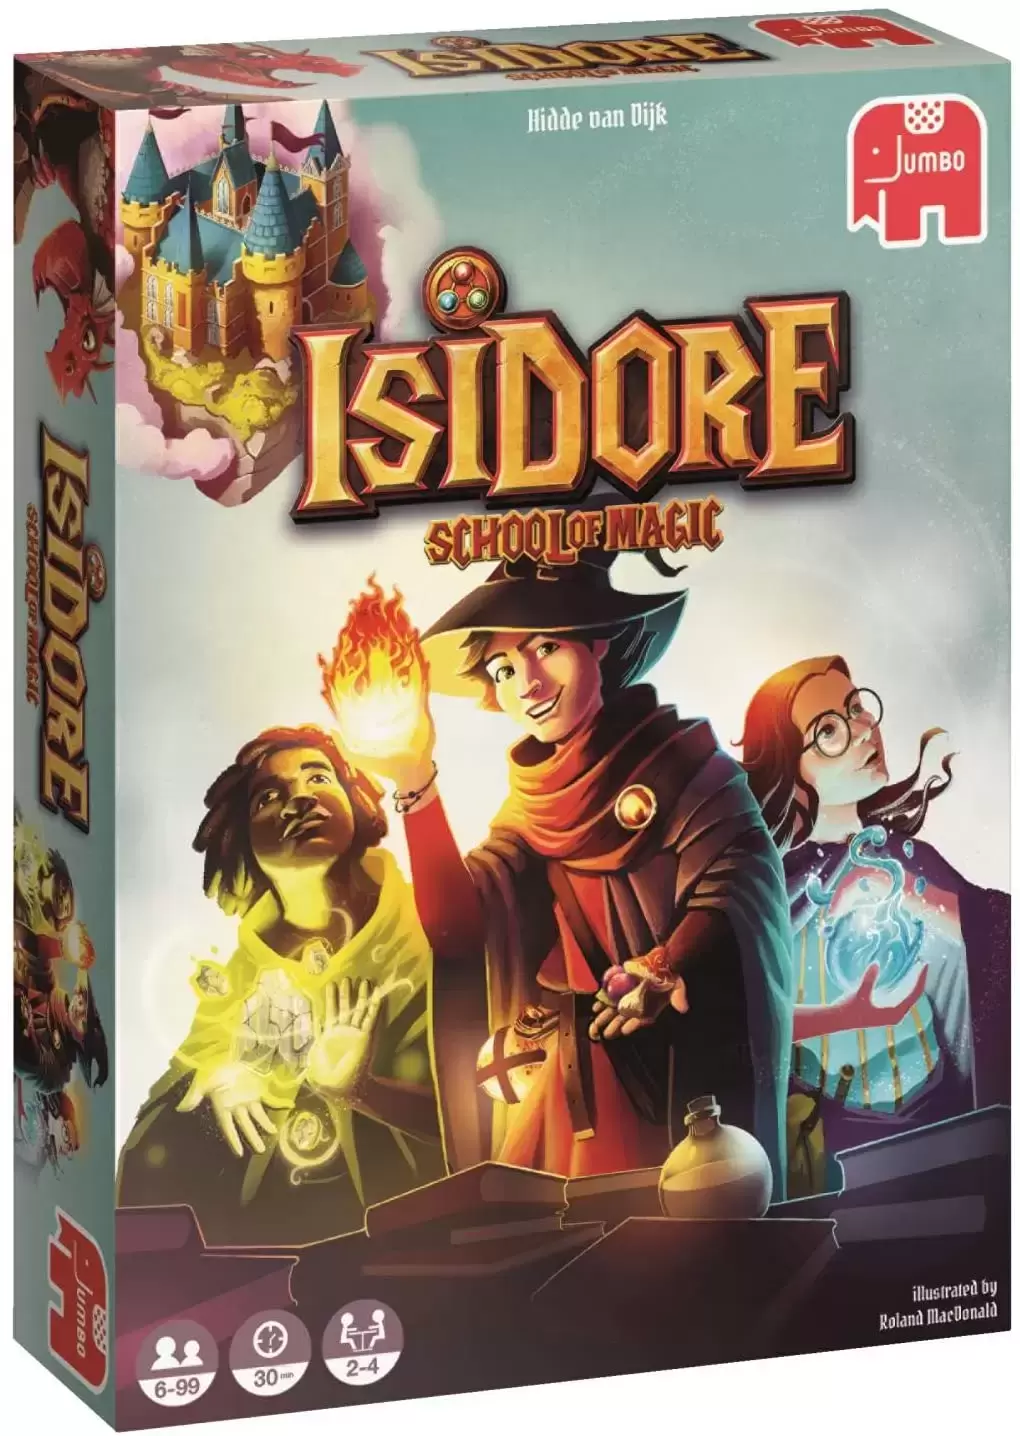 Autres jeux - Isidore - School of magic